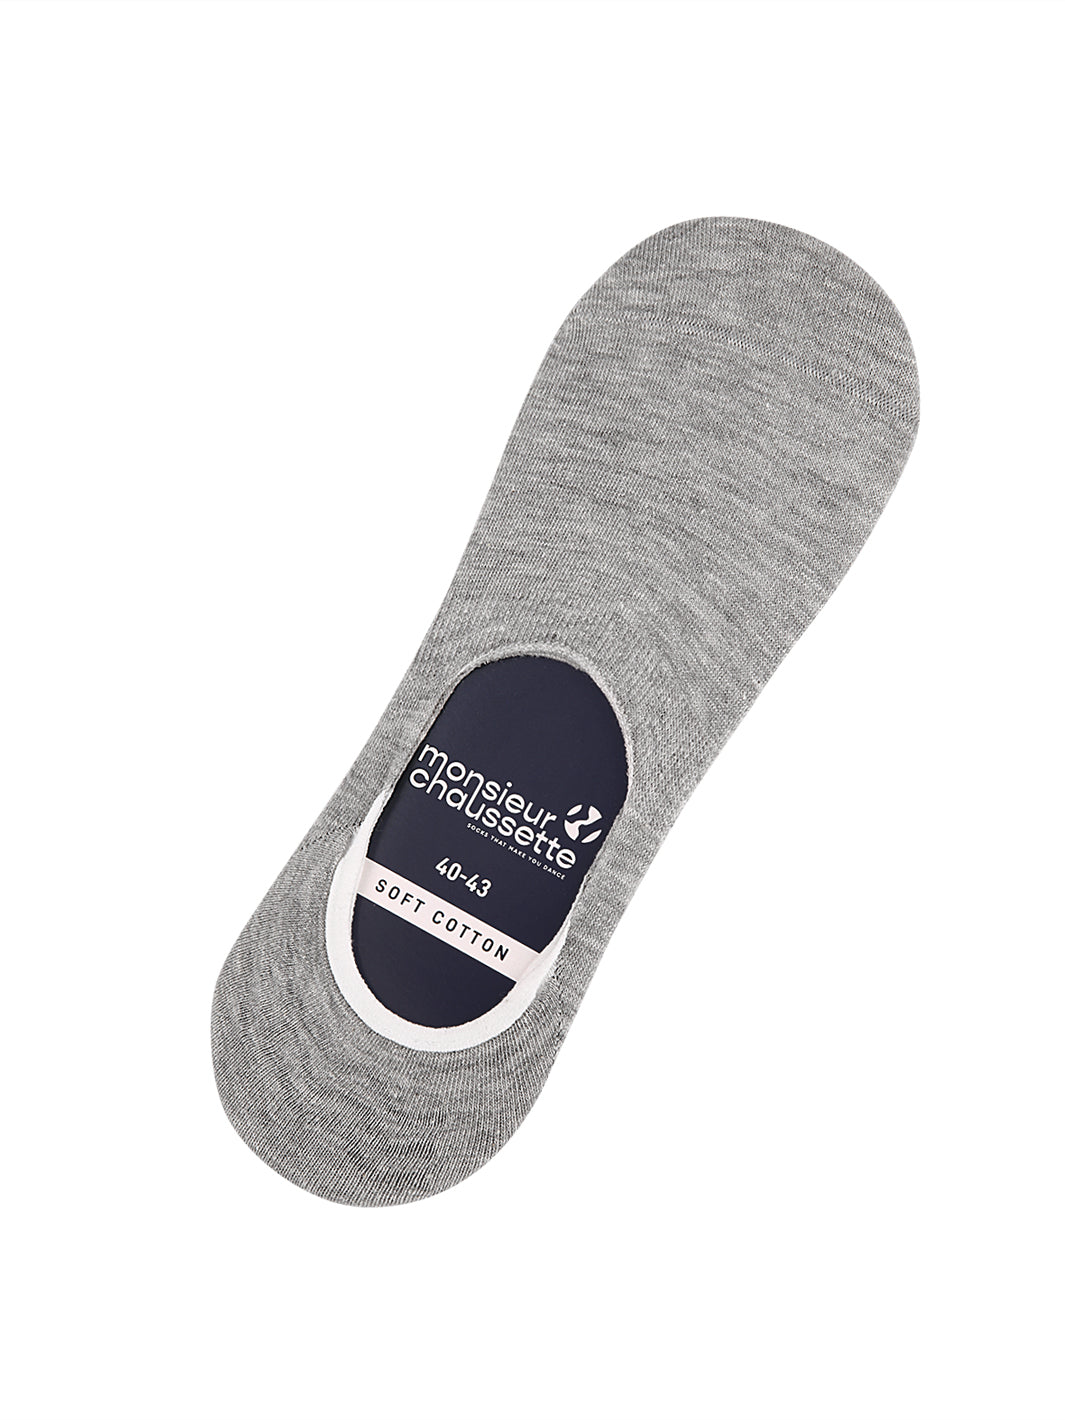 Babet Socks - Grey